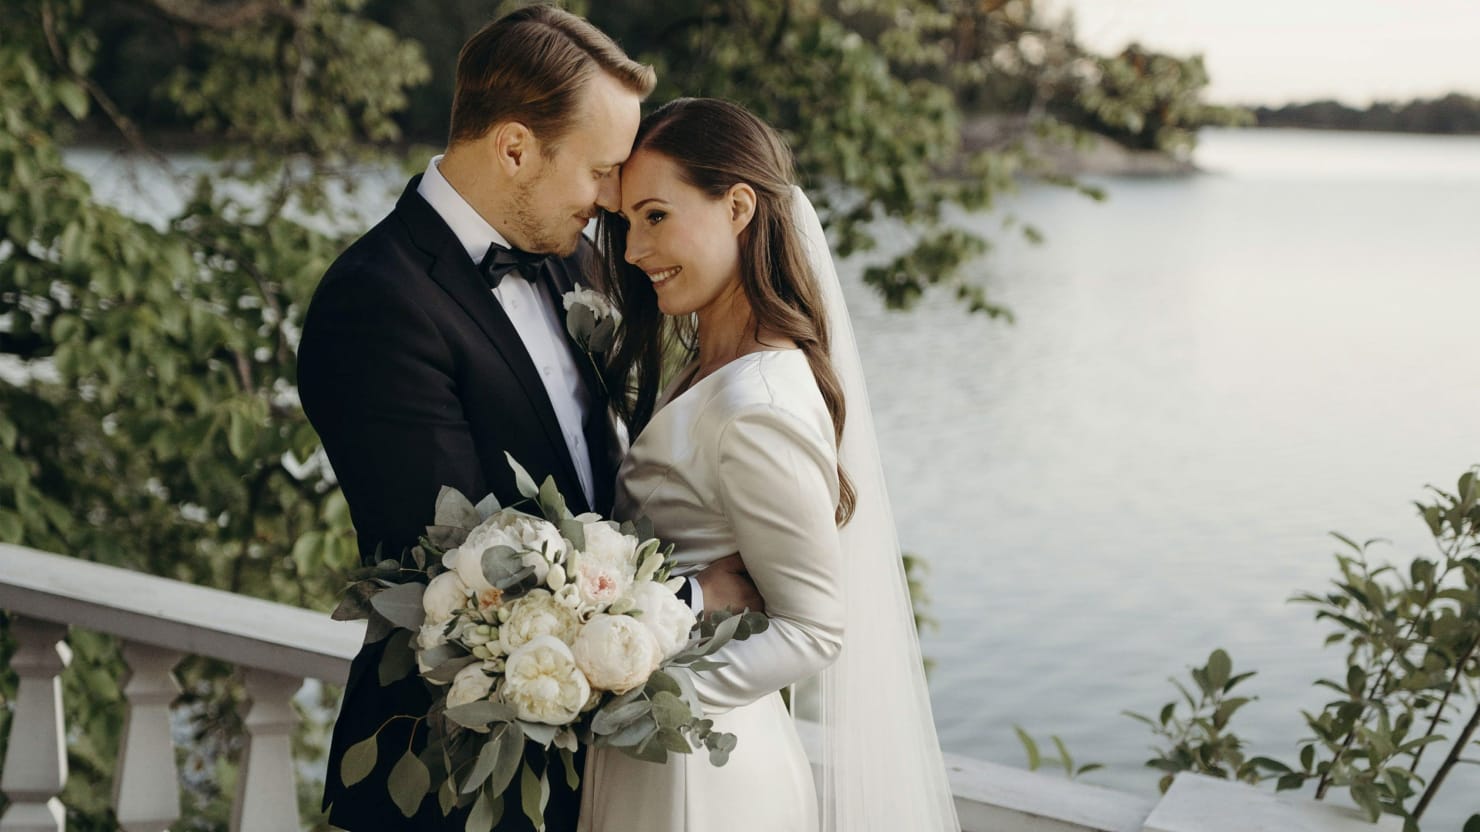 Finnish Prime Minister Sanna Marin’s Lovely Wedding Gives Us Plenty to